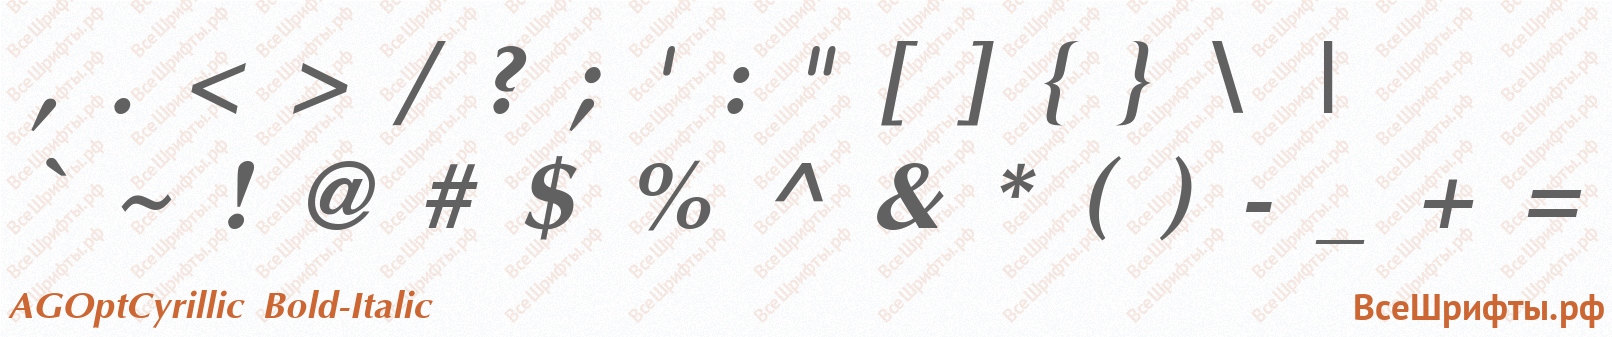 Шрифт AGOptCyrillic Bold-Italic со знаками препинания и пунктуации